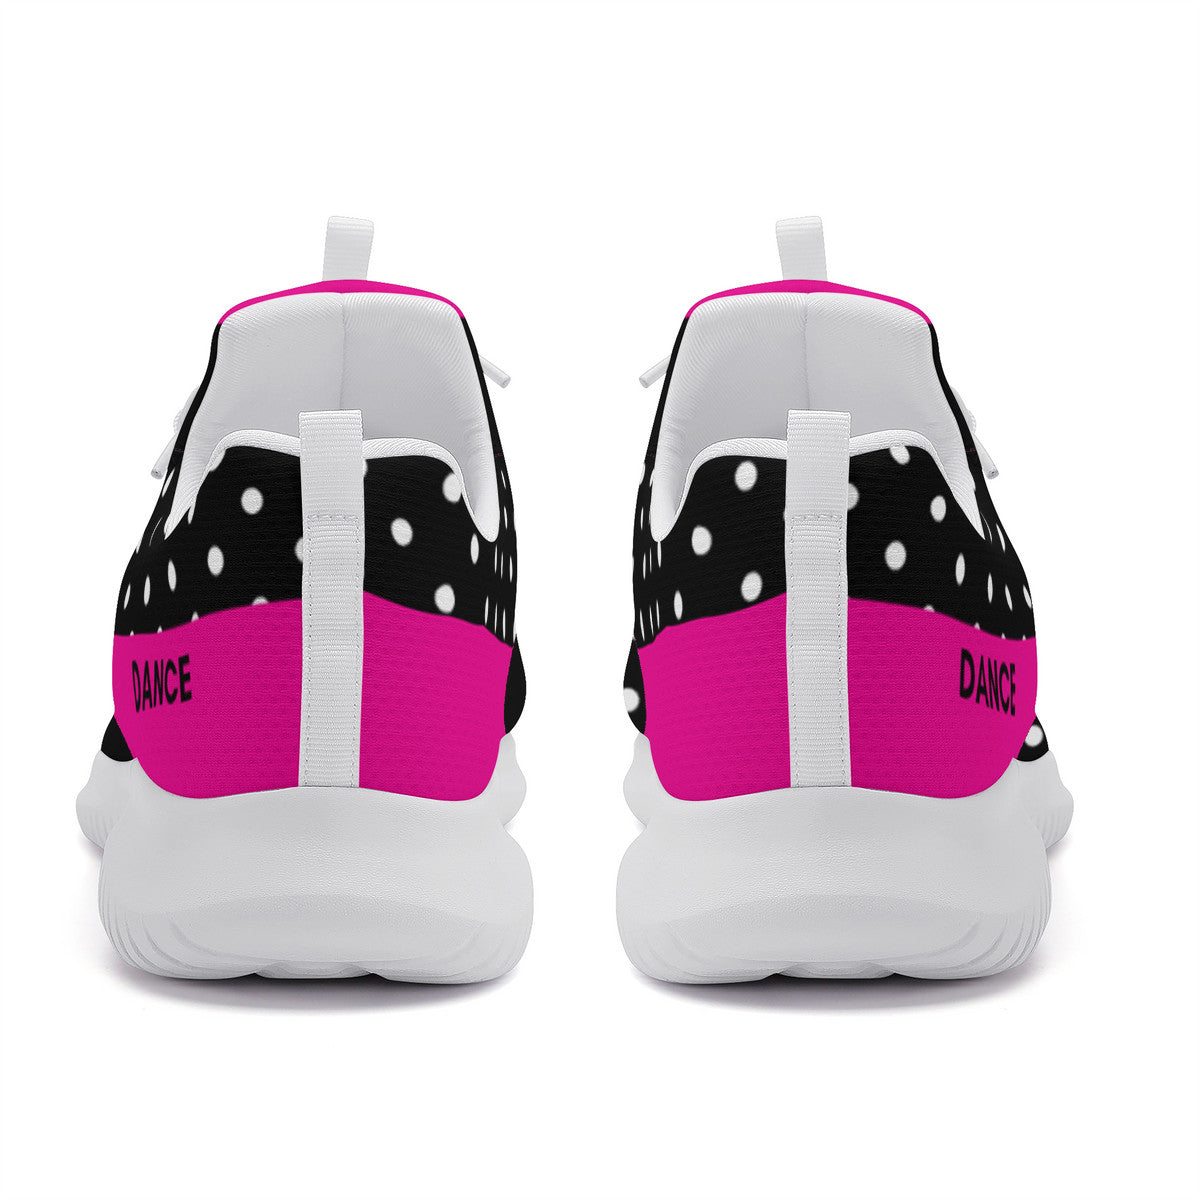 Dance Sneakers - Polka Dots - Black